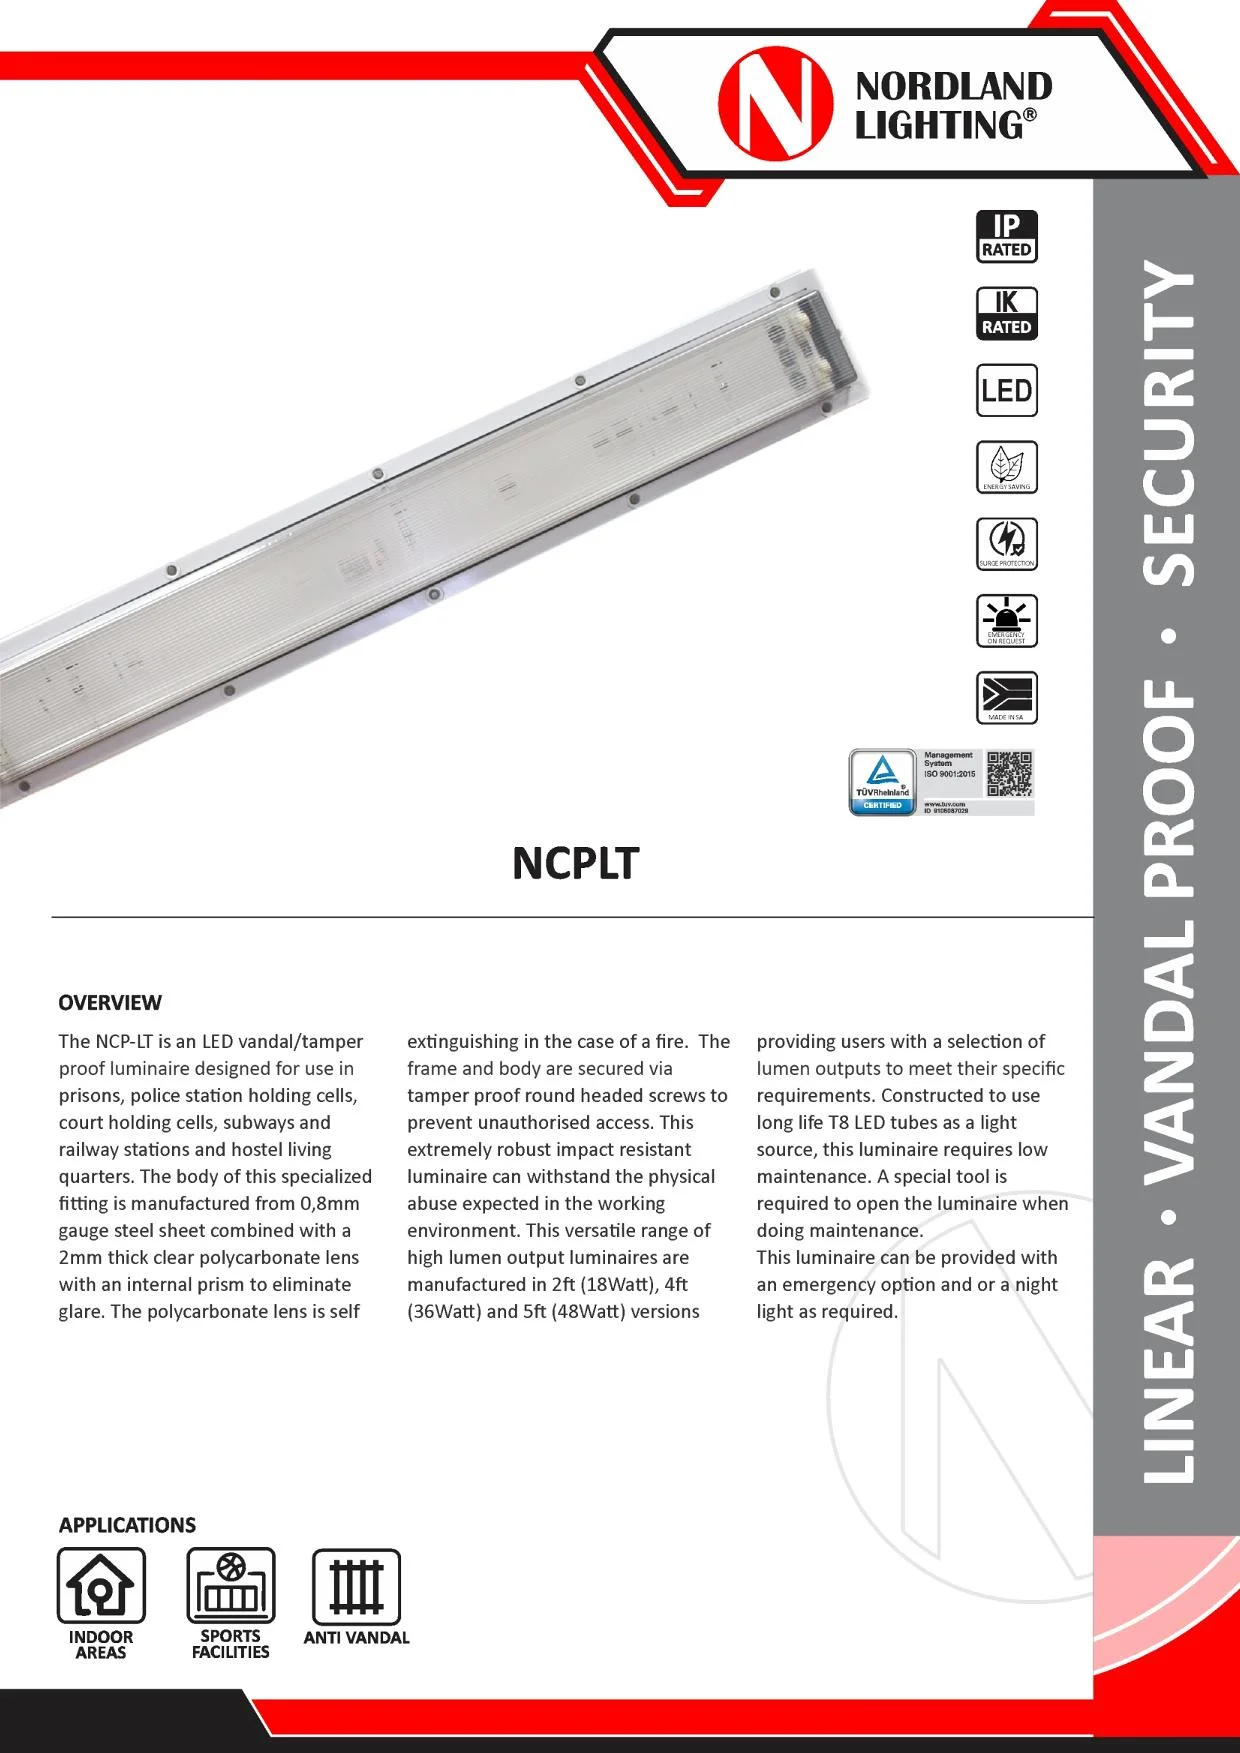 NL34 Nordland NCPLT LED Vandal Proof Luminaire